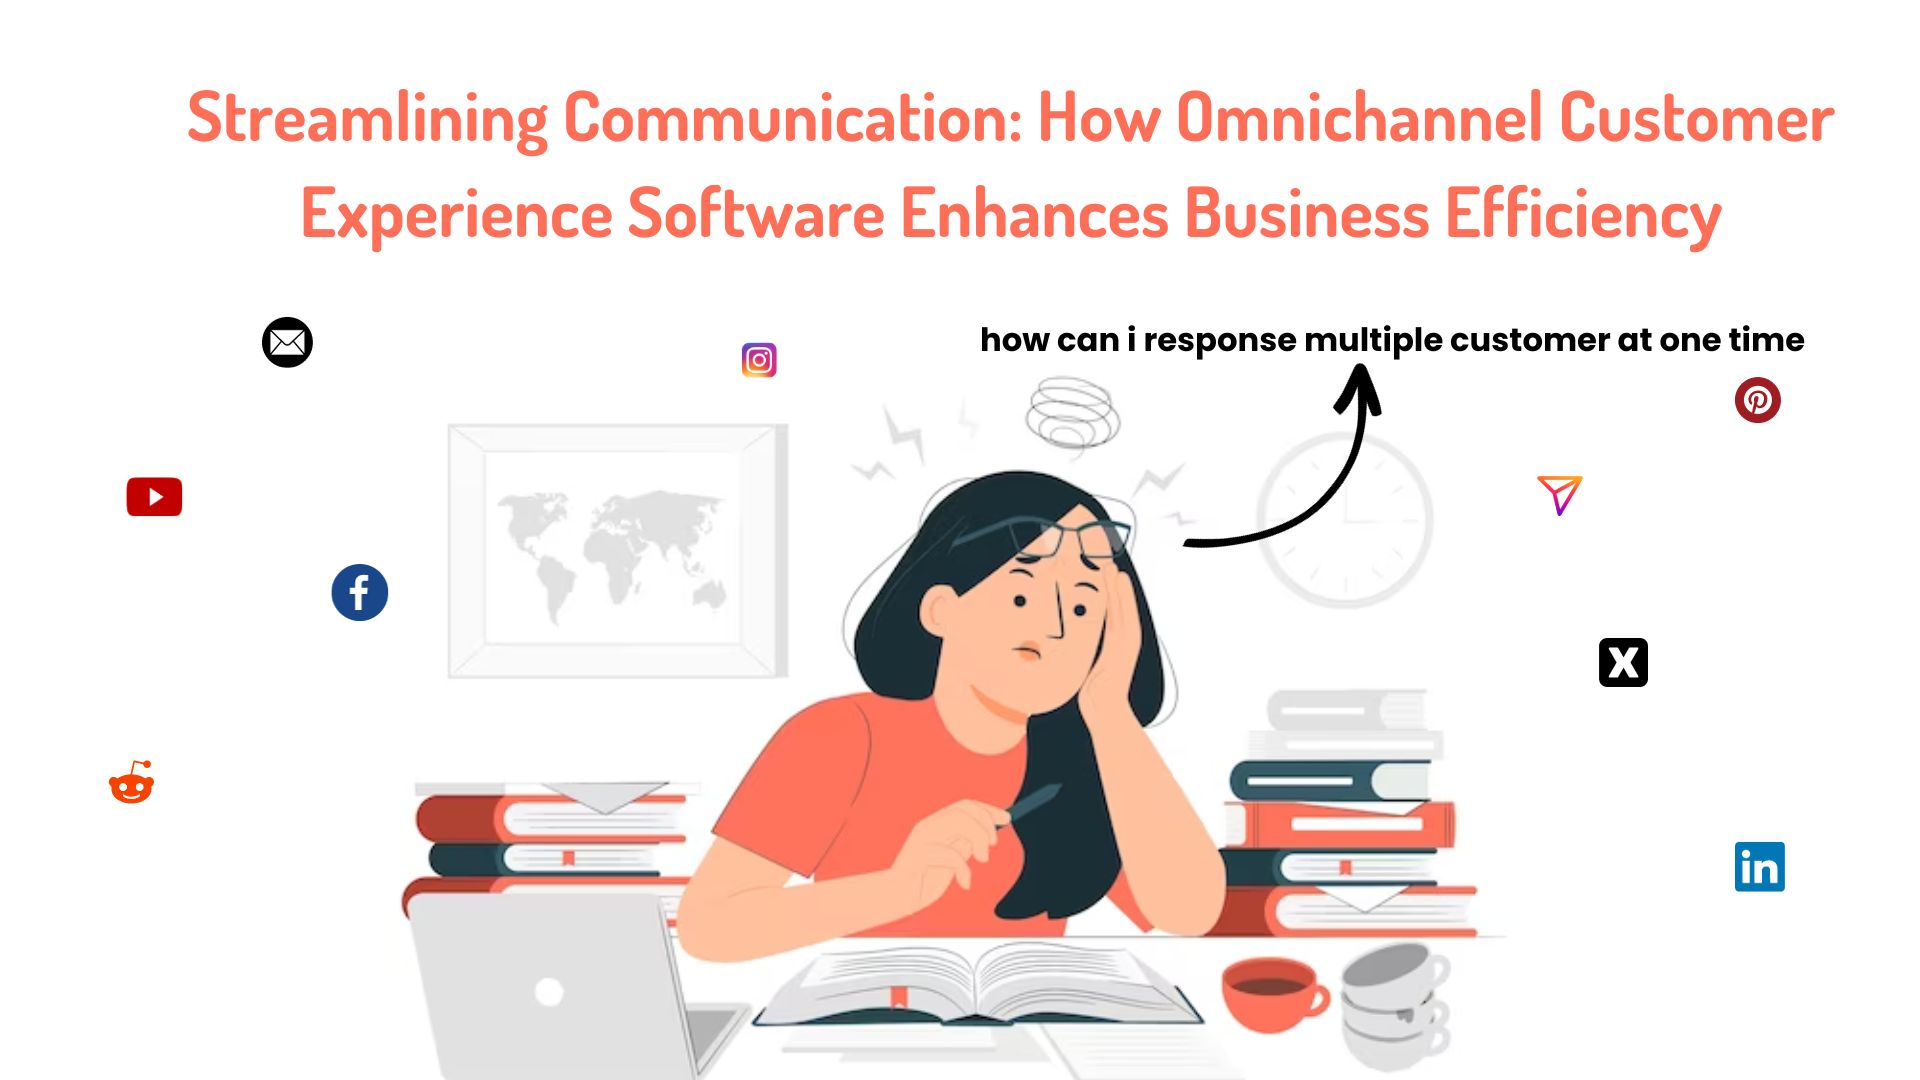 Omnichannel customer experience software